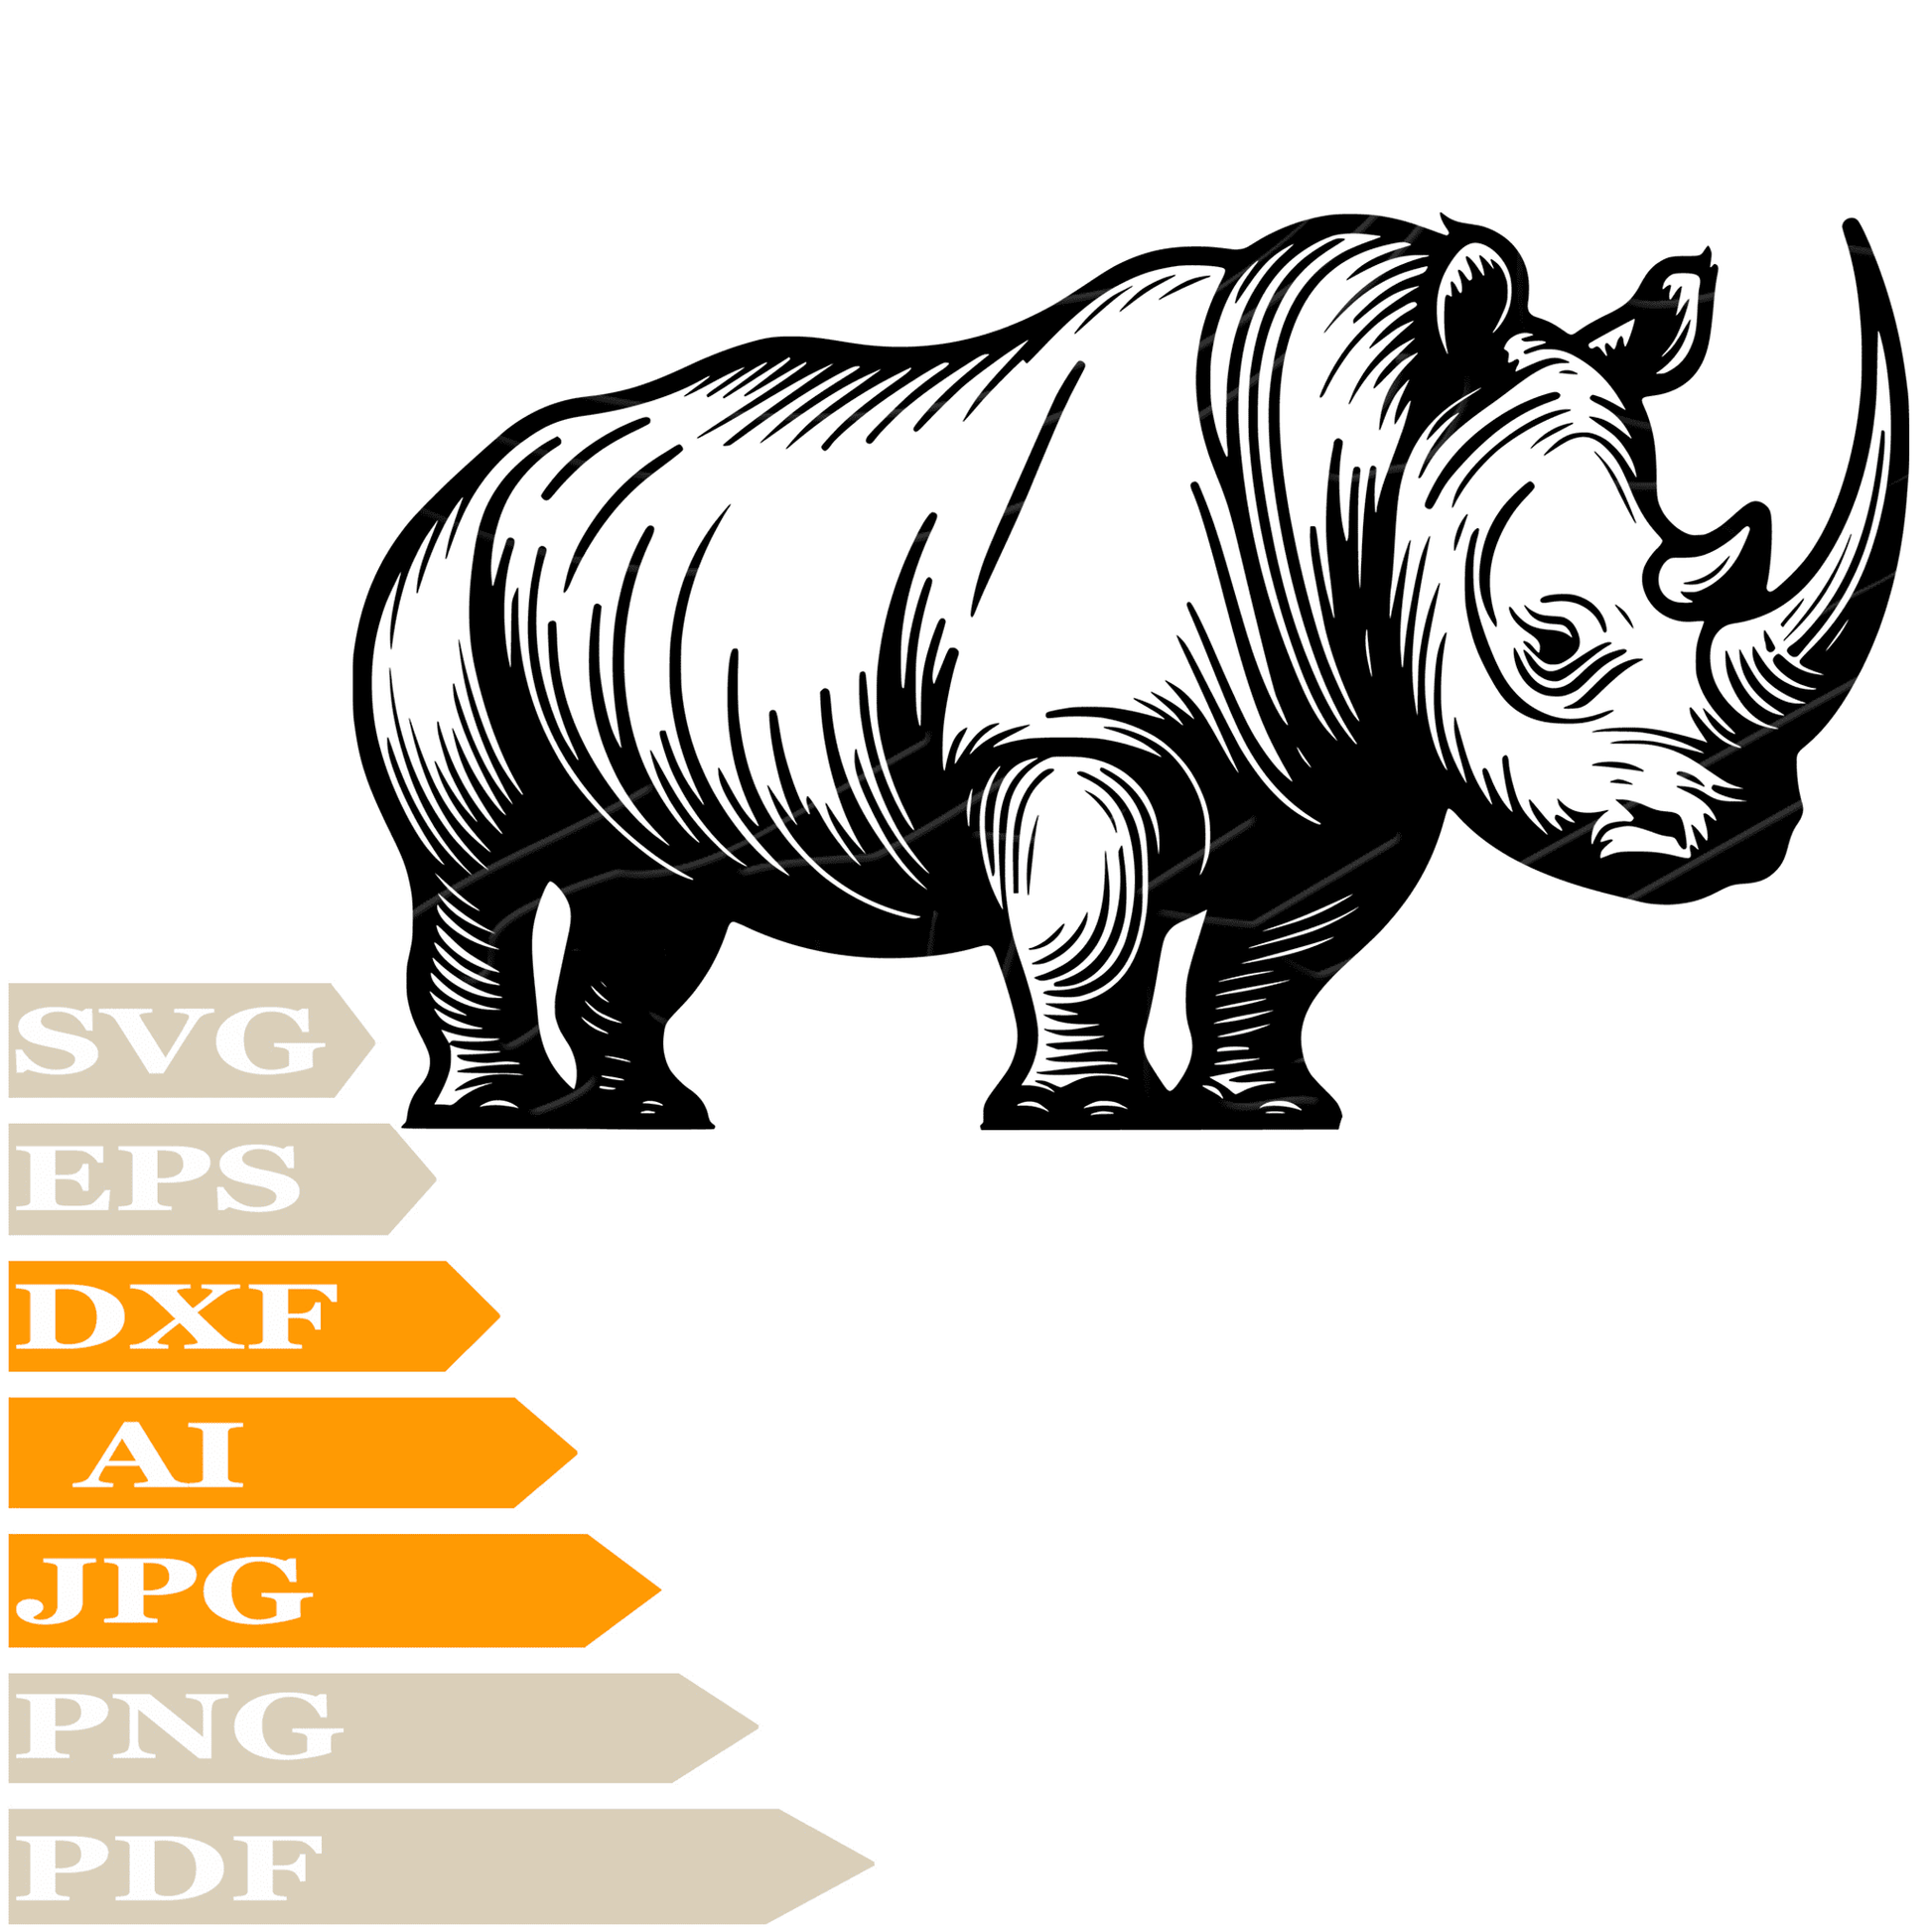 Rhino SVG File, African Rhino SVG Design, Rhinoceros SVG, Rhino Vector File, Rhinoceros PNG, Image Cut, For Cricut, Clipart, Cut File, Print, Digital Download, T-Shirt, Silhouette